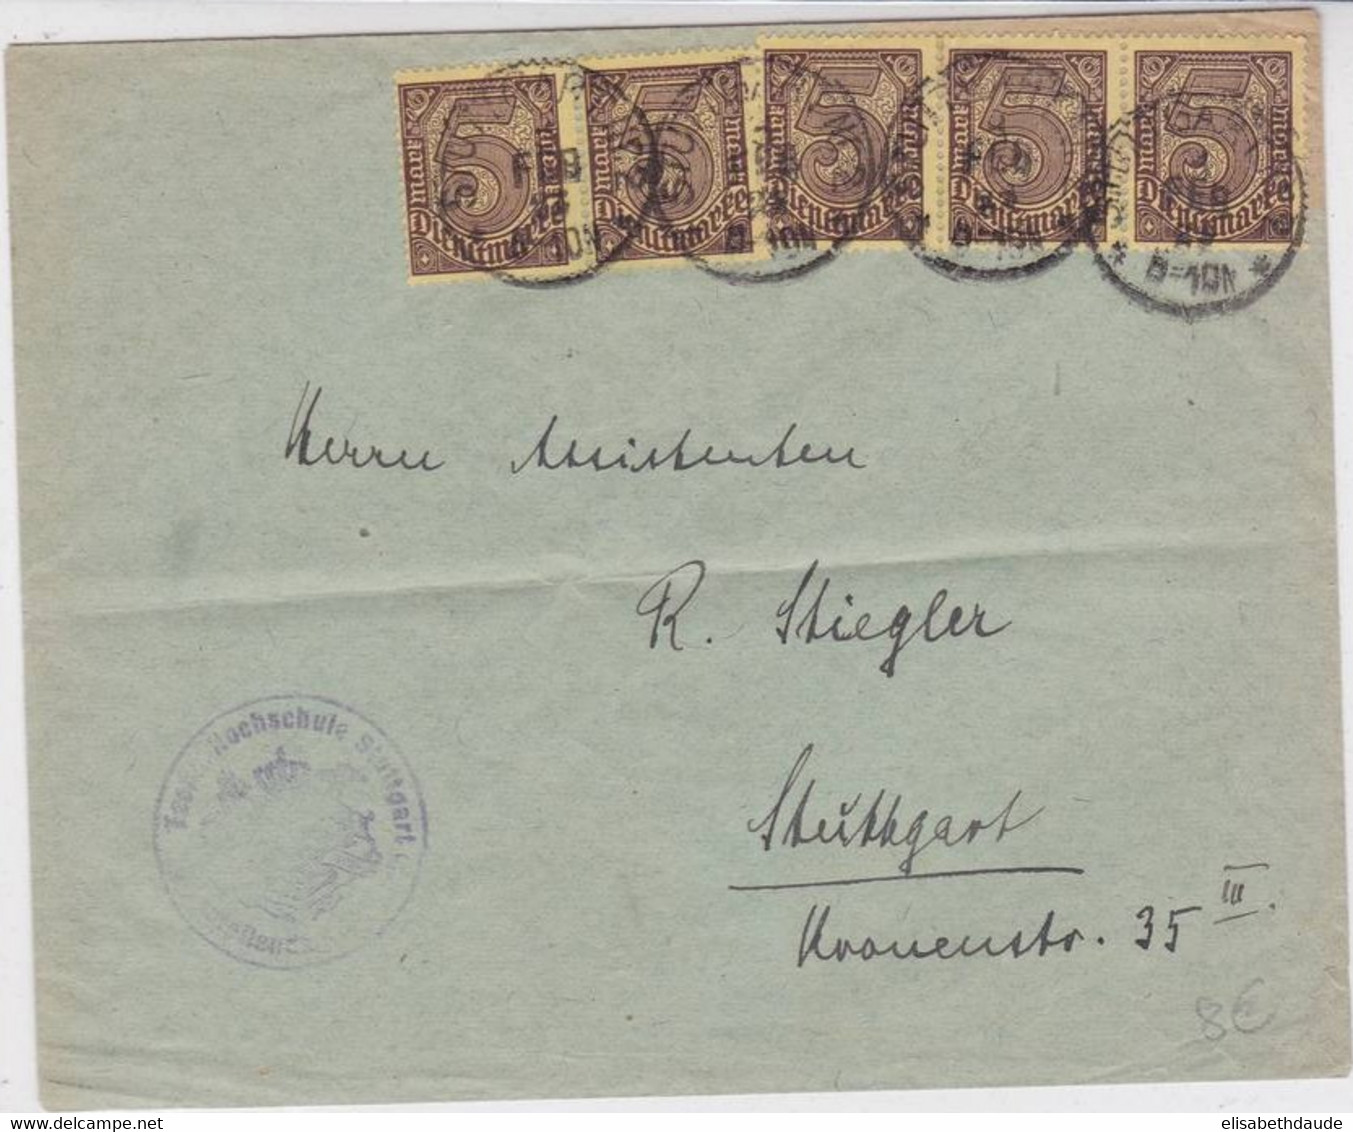 1923 - INFLA - ENVELOPPE De SERVICE (DIENSTMARKE) De STUTTGART Avec AFFRANCHISSEMENT à 25 MARKS - Dienstmarken